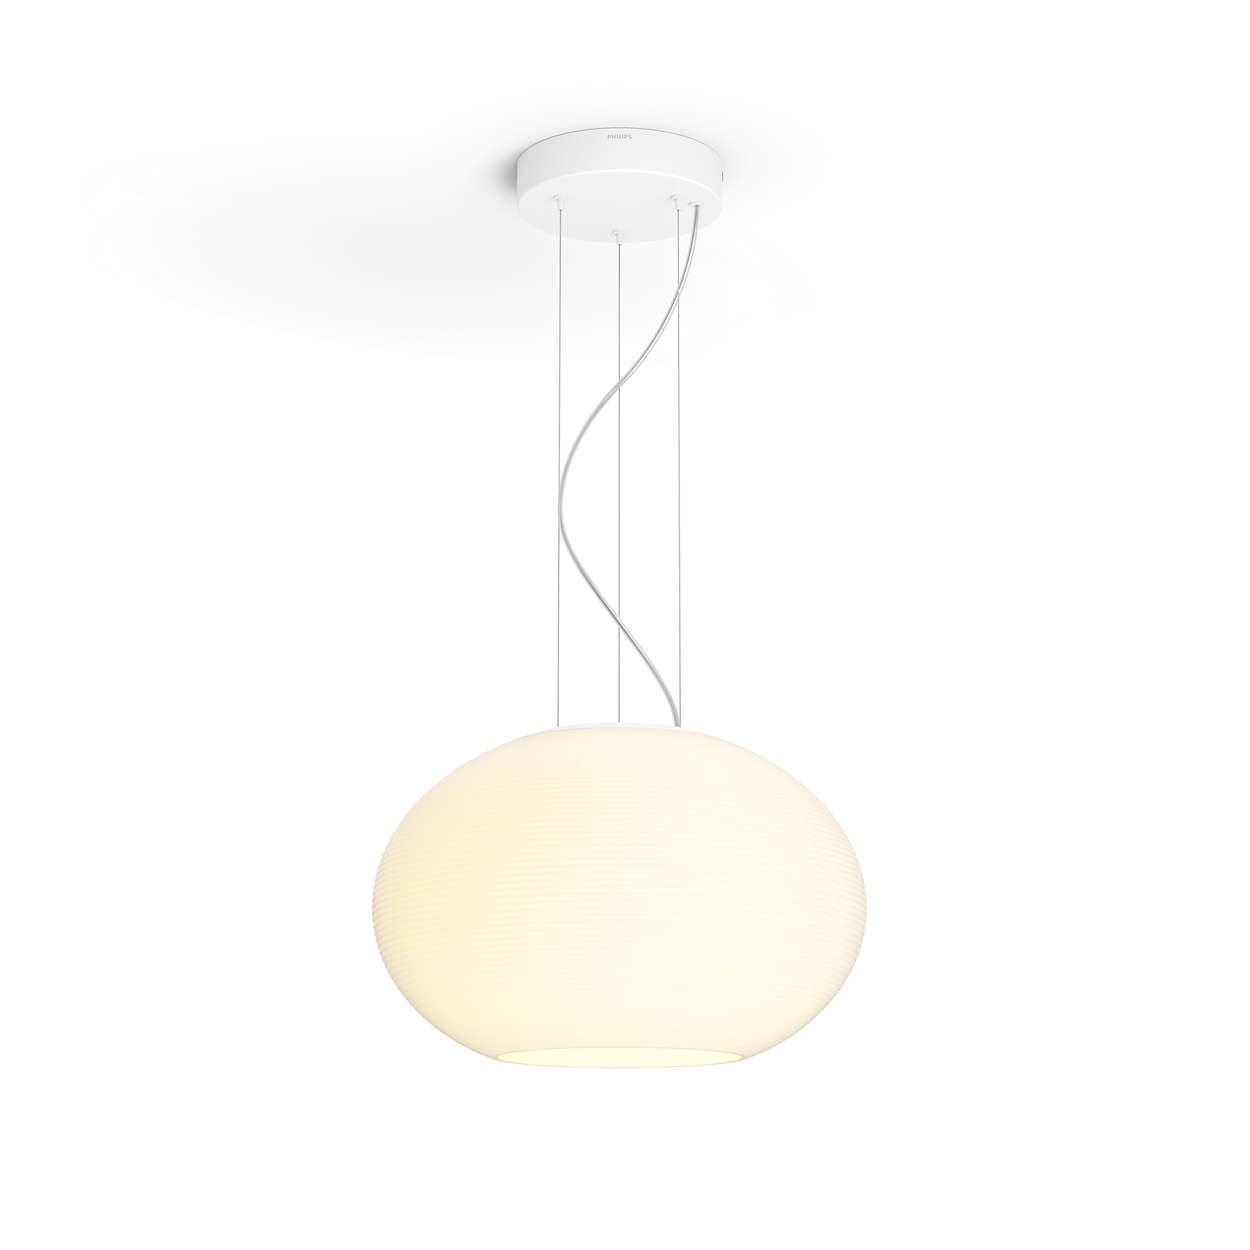 PHILIPS Flourish Závěsné svítidlo,  Hue White and color ambiance,  230V,  1x39.5W integr.LED,  Bílá4 